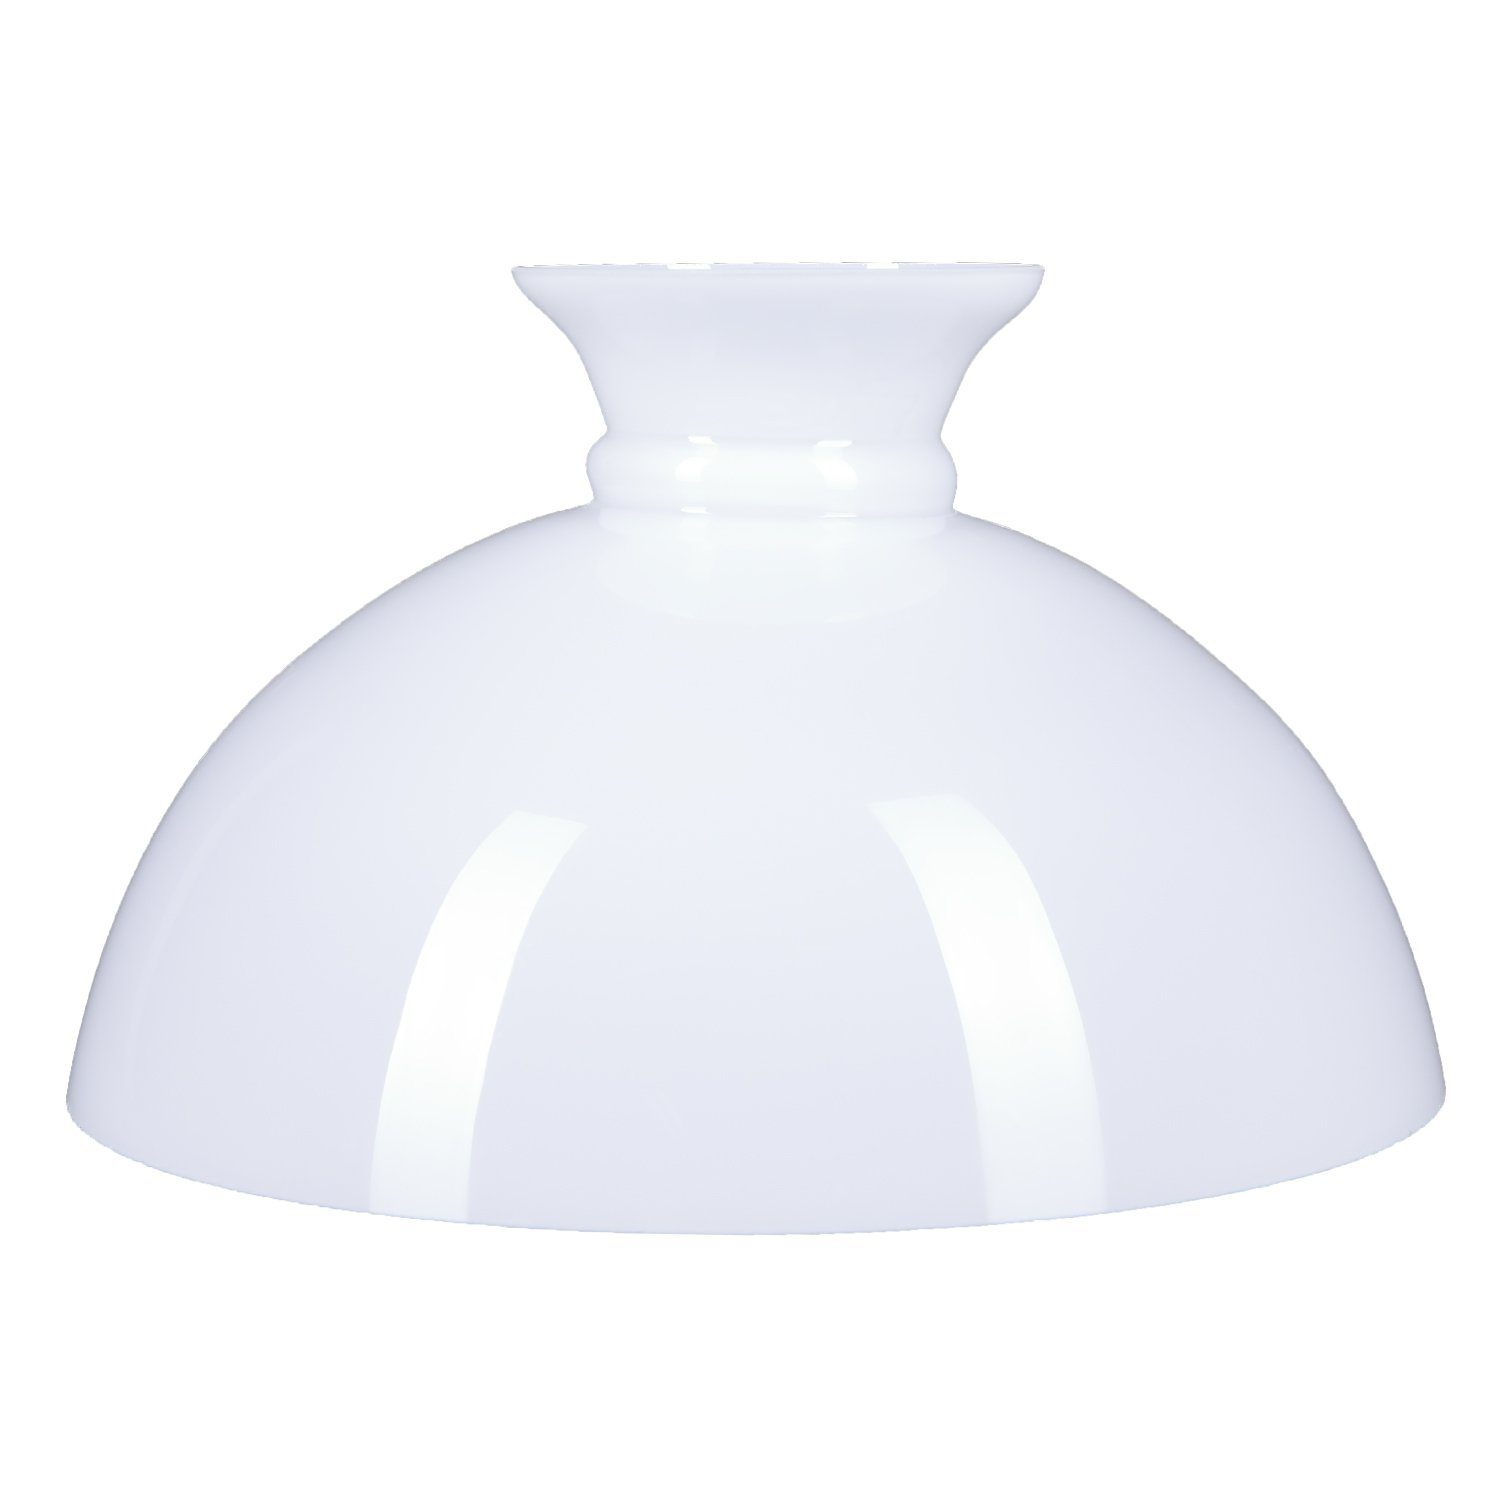 Home4Living Lampenschirm Petroleumglas Lampenglas Weiß Ø 280mm Glasschirm rund, Dekorativ